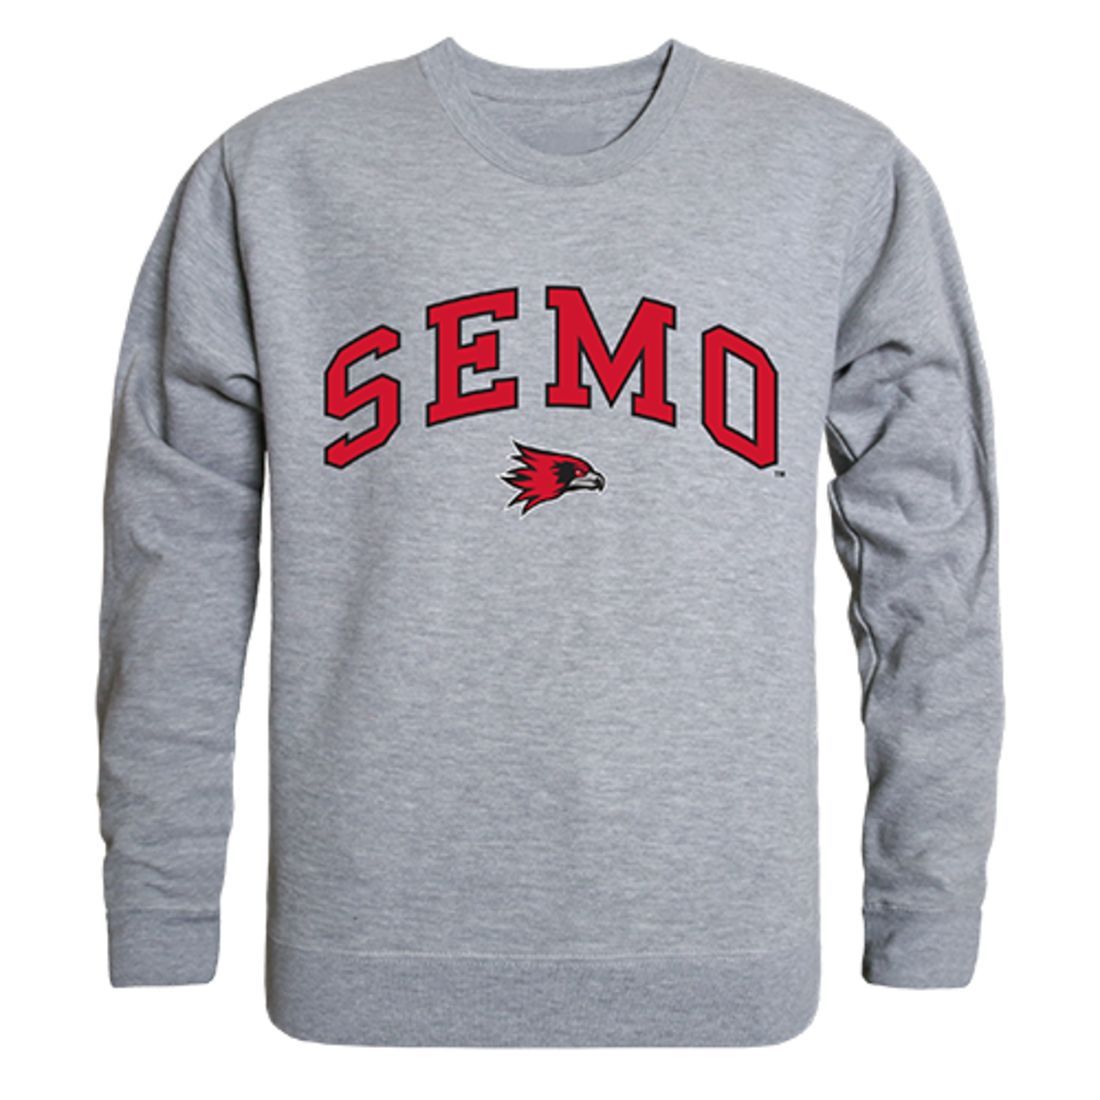 SEMO Southeast Missouri State University Campus Crewneck Pullover Sweatshirt Sweater Heather Grey-Campus-Wardrobe